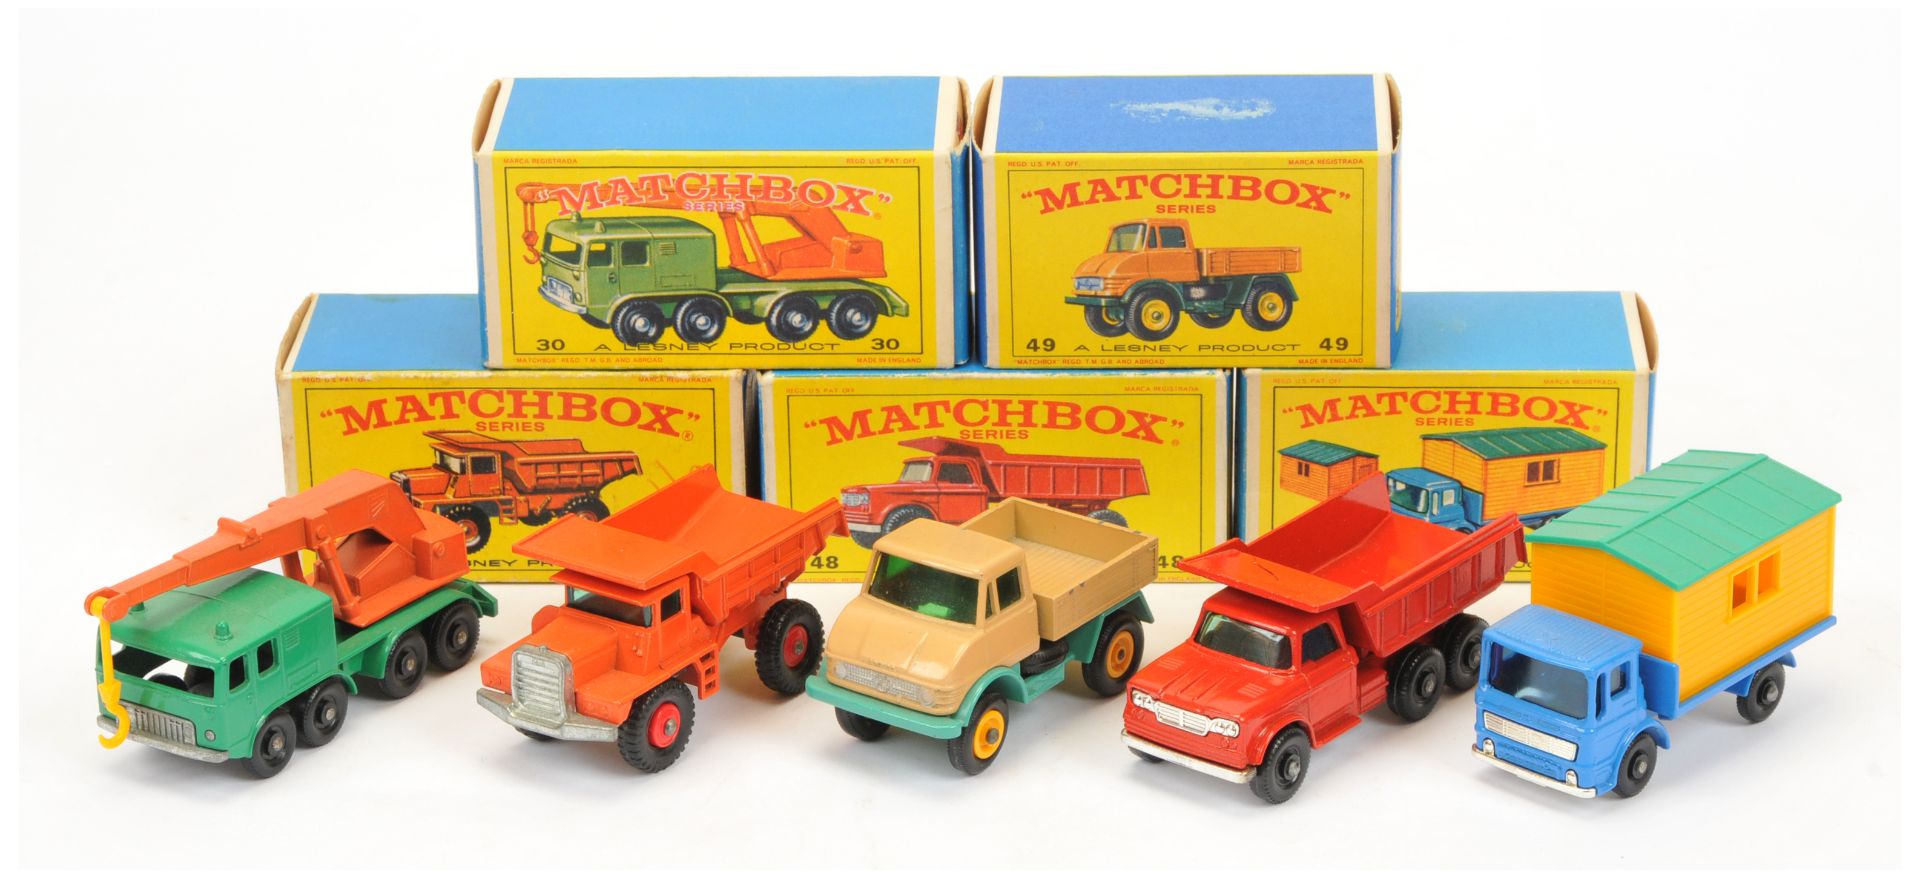 Matchbox Regular Wheels group (1) 28d Mack Dumper - orange cab, chassis and tipper, red plastic h...